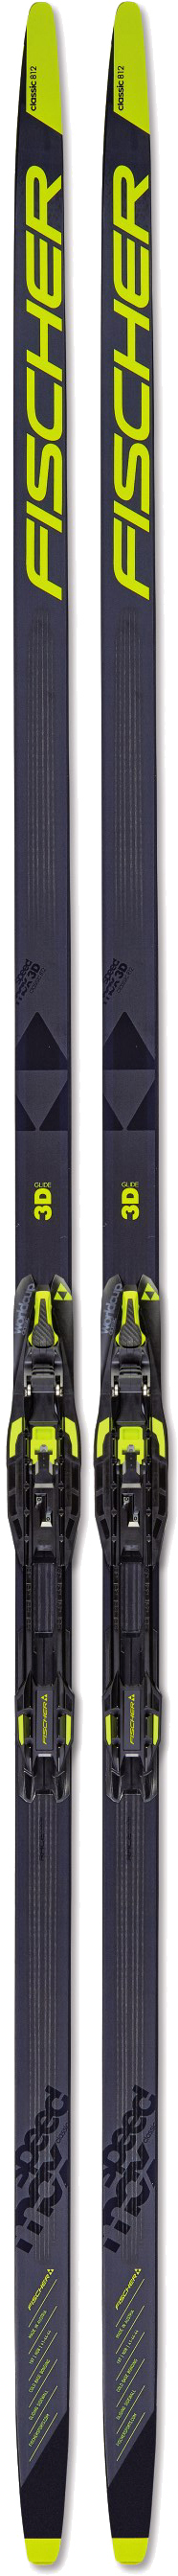 Прогулочные лыжи Fischer Speedmax 3D Classic Plus 812 Medium IFP 197 см